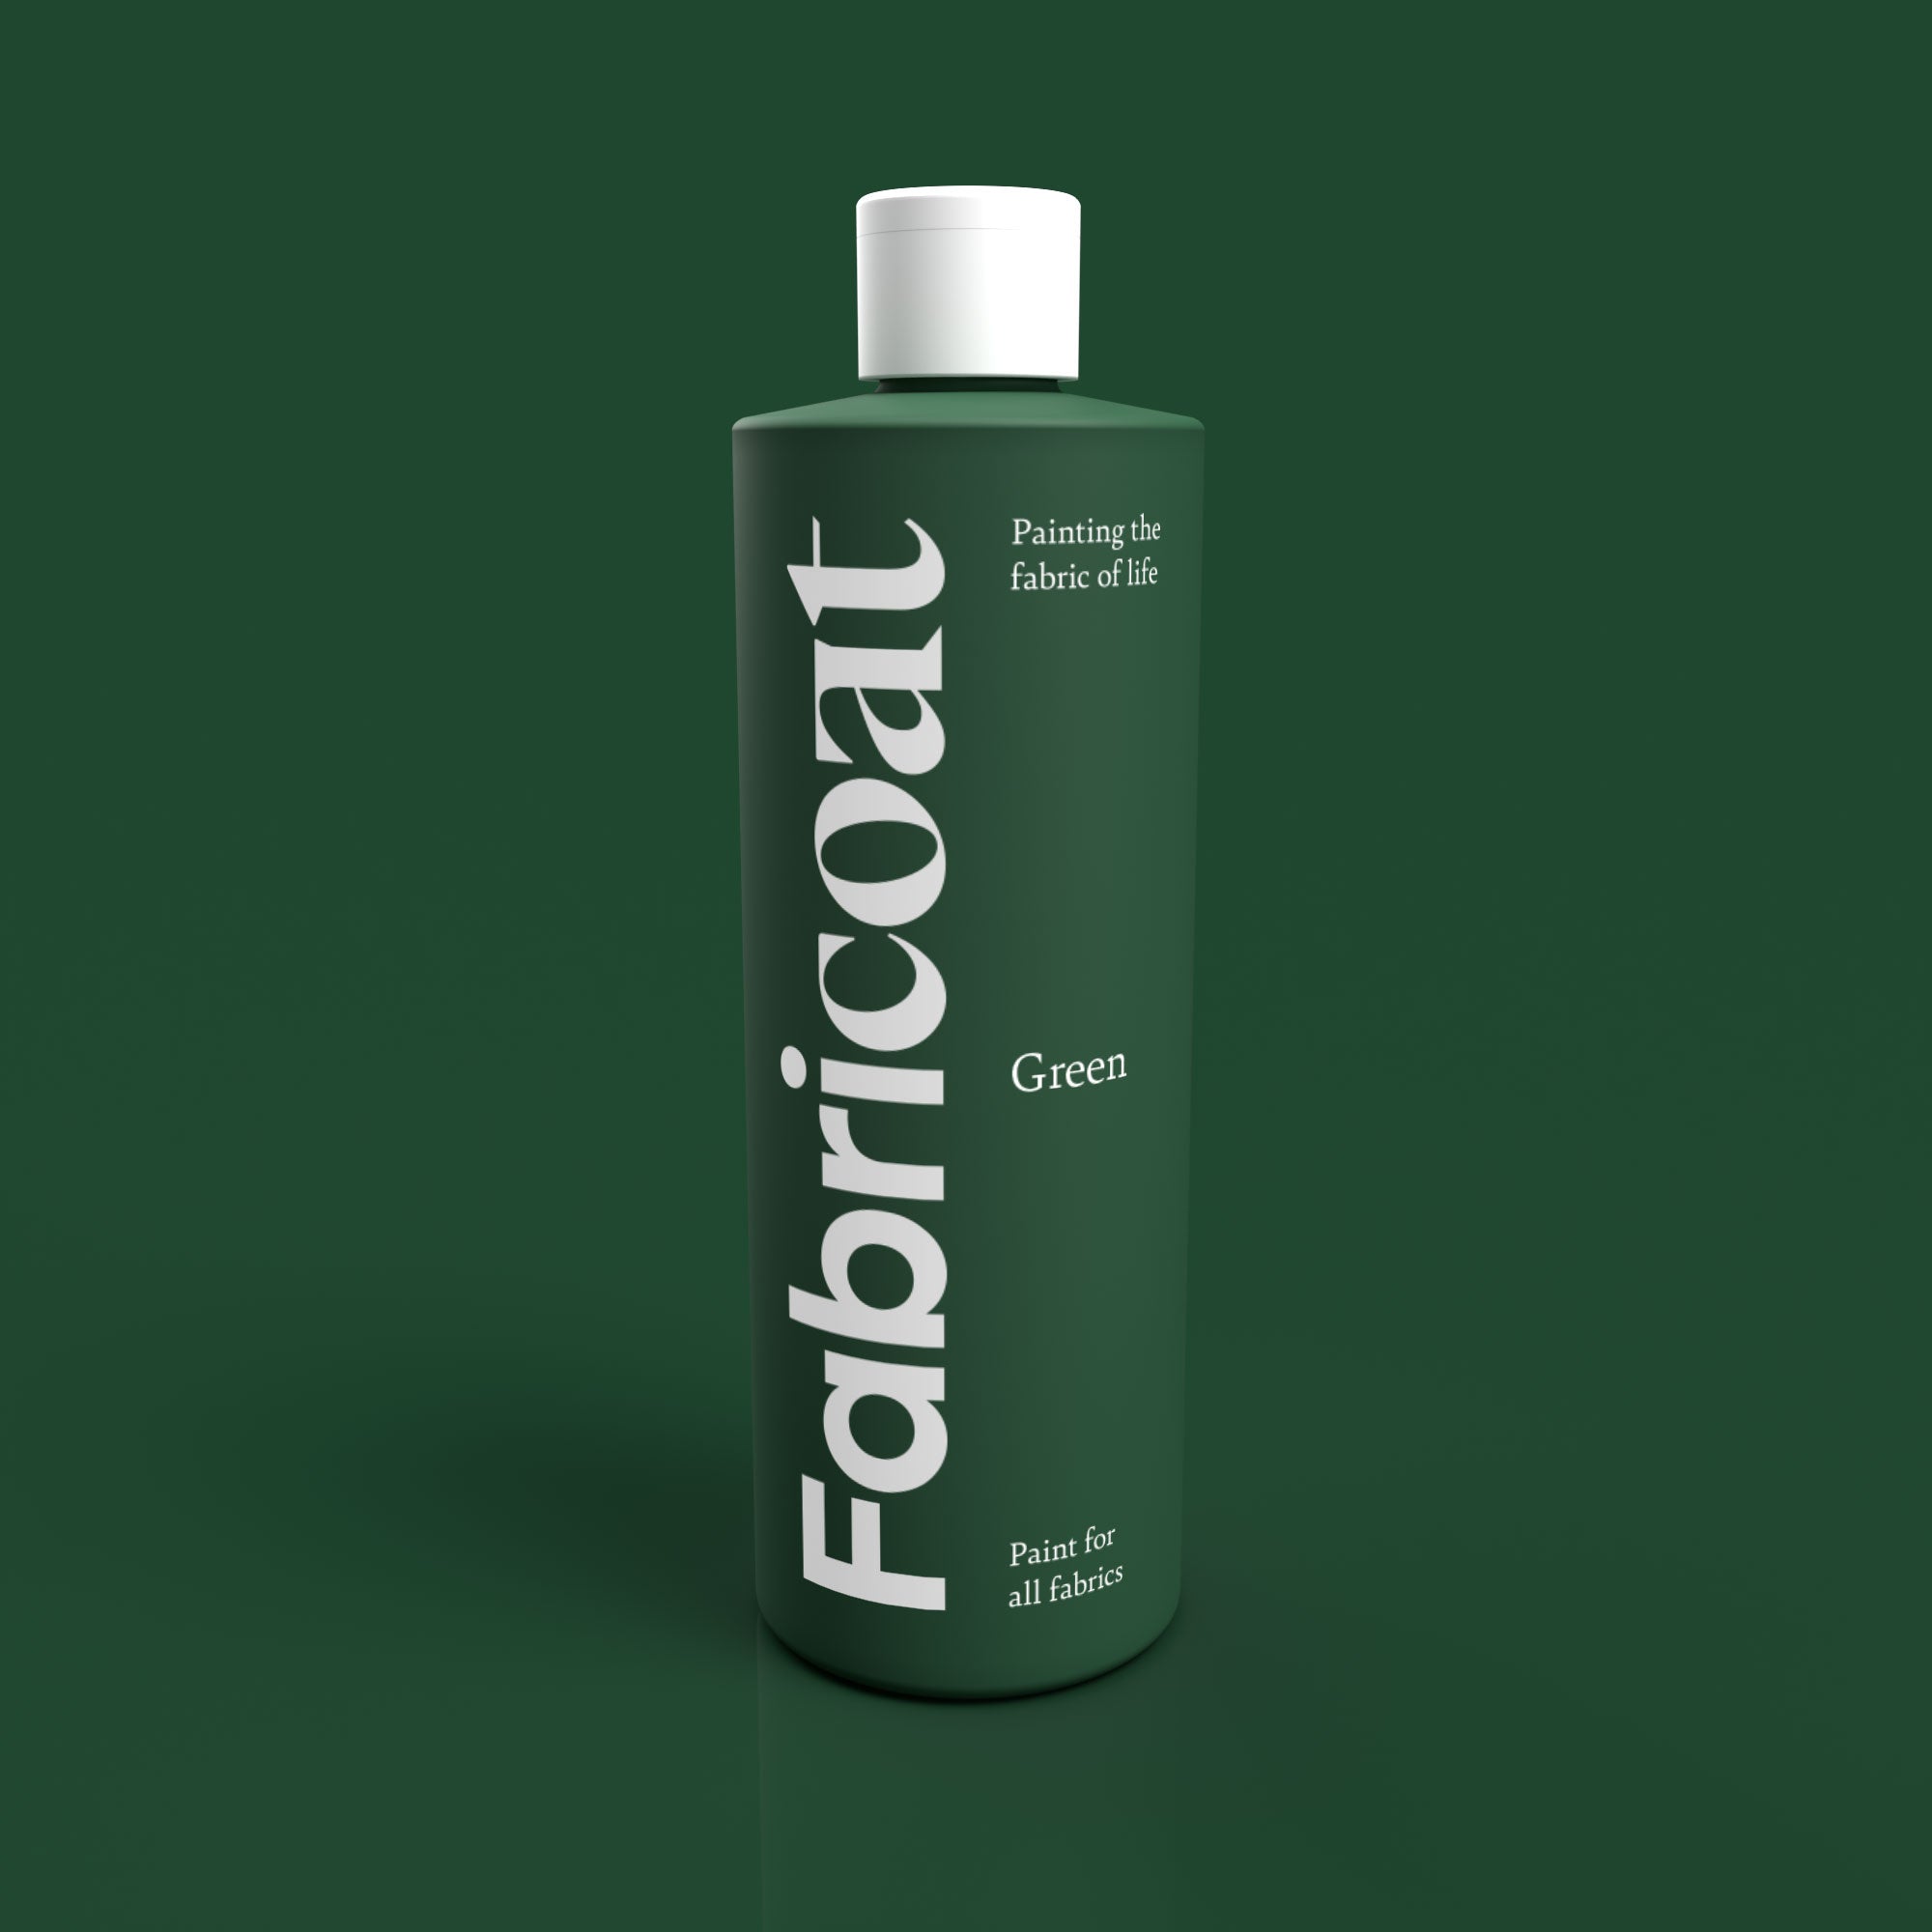 Fabricoat Green Fabric Paint 500ml Bottle